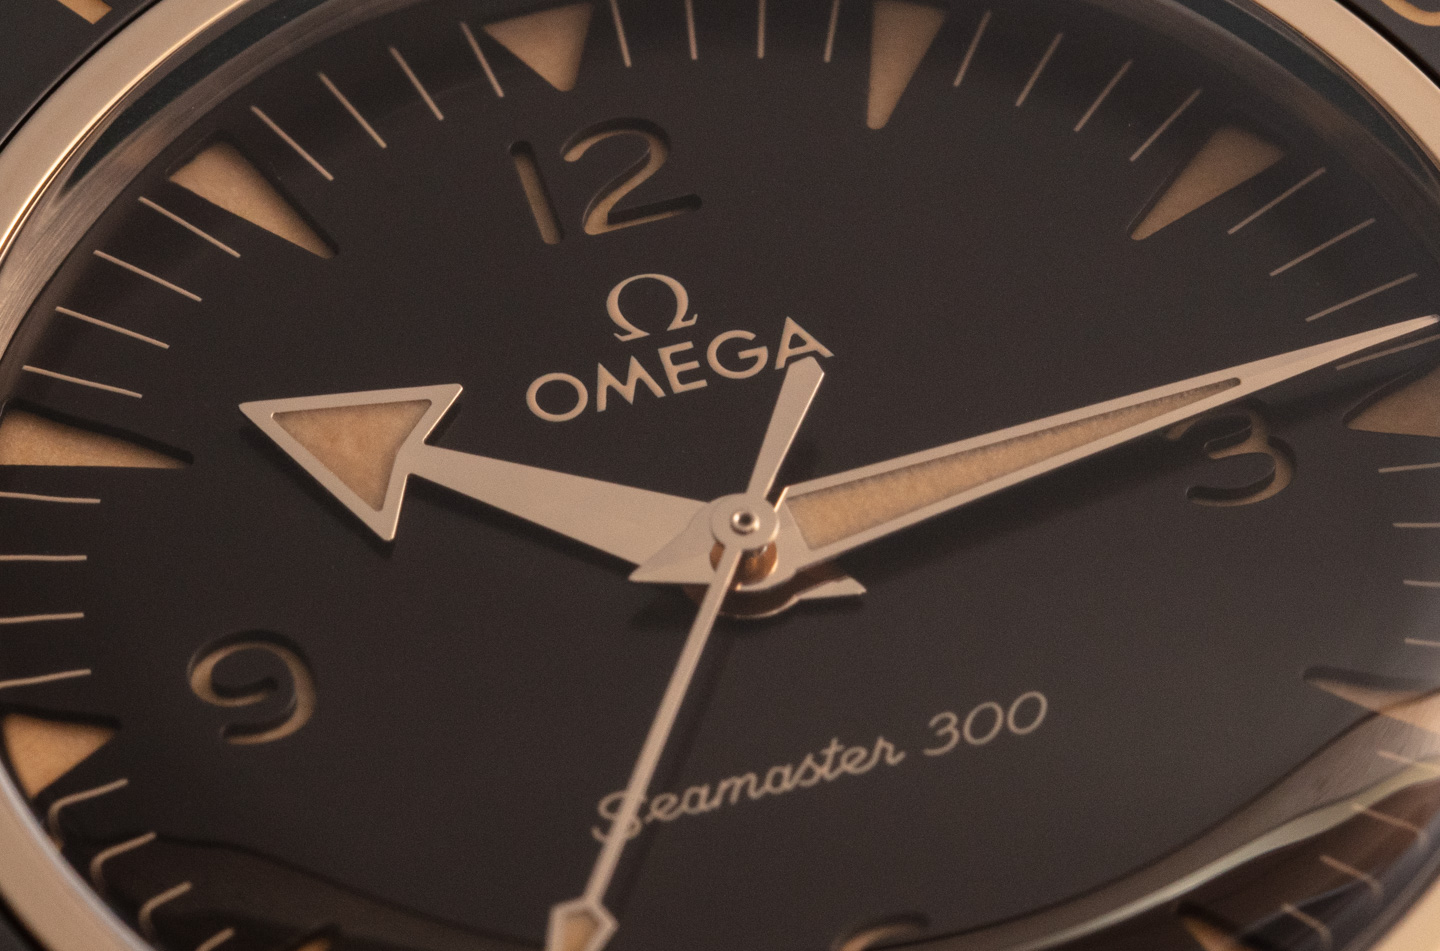 omega watch price usd